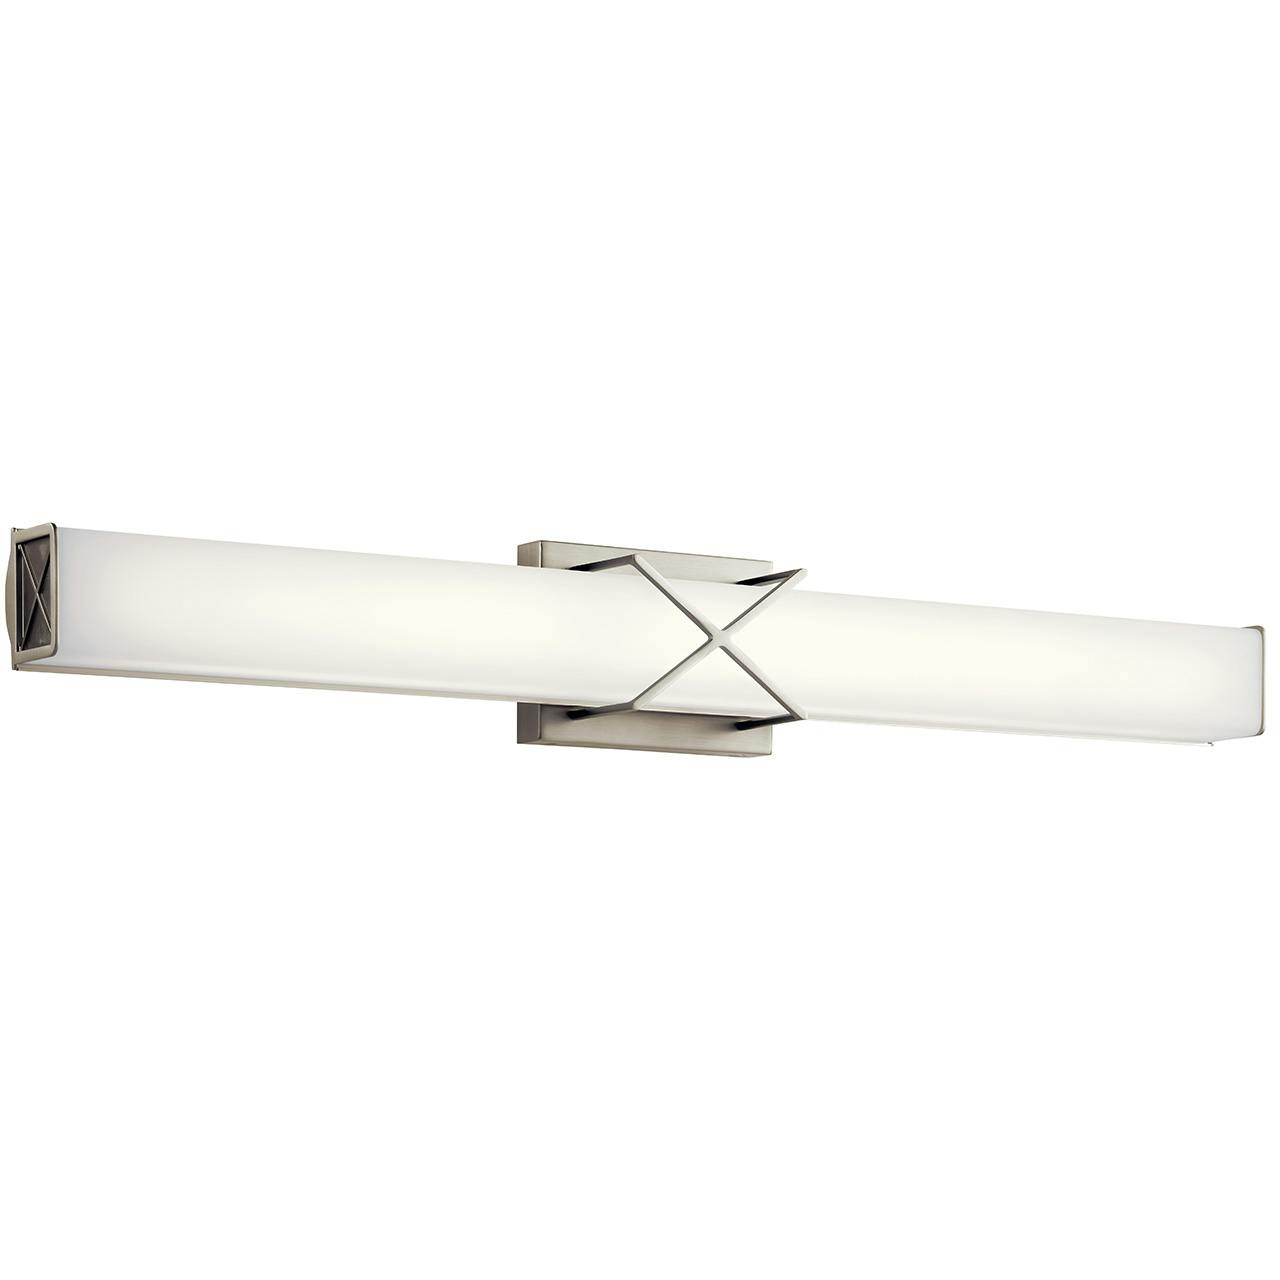 Trinsic™ 32" LED Vanity Light Nickel on a white background